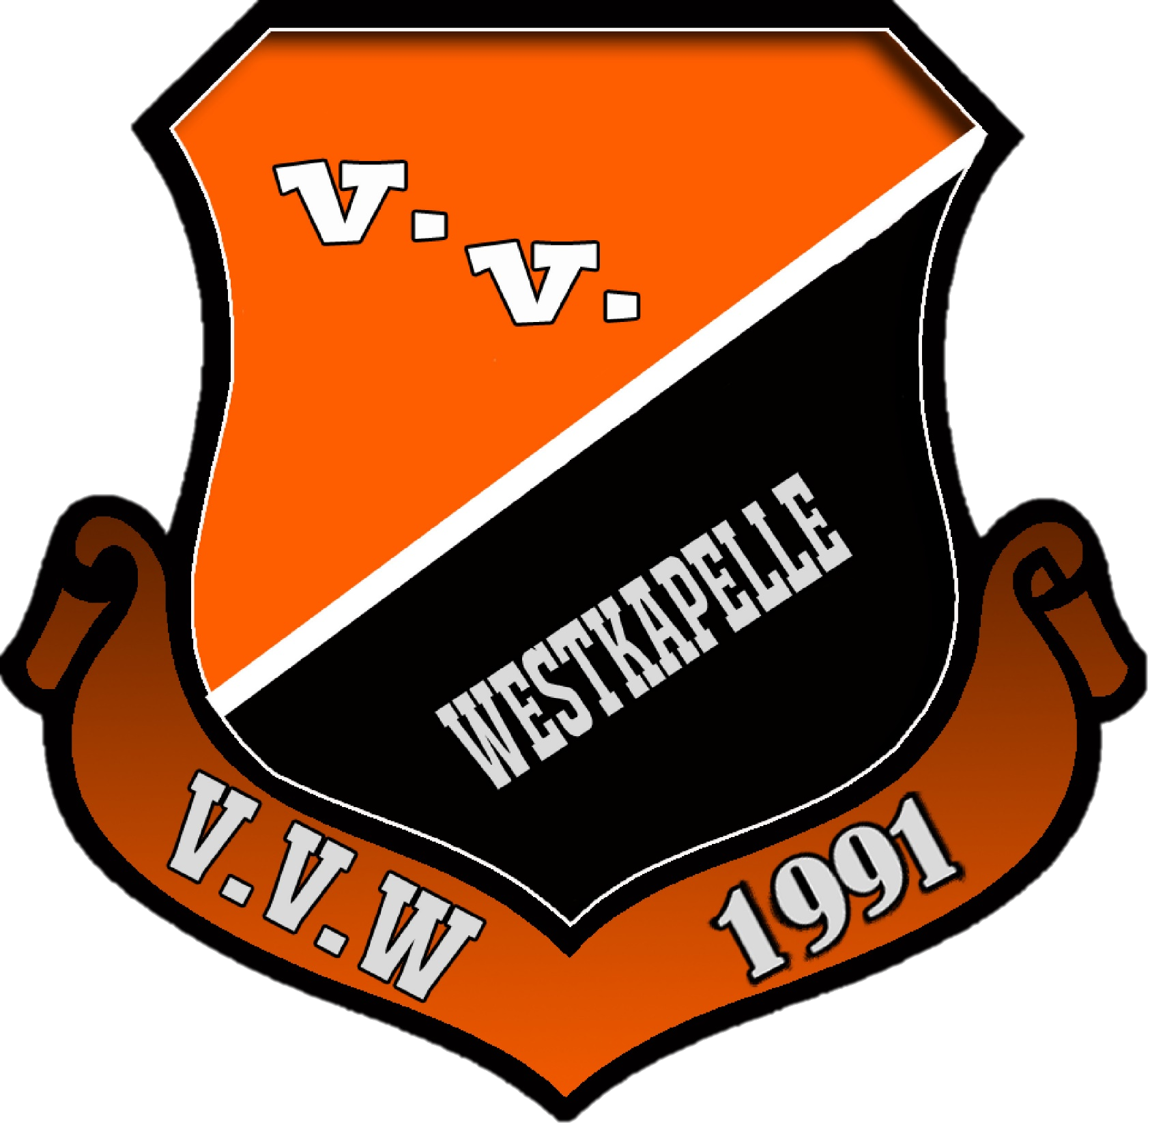 Wappen VV Westkapelle diverse